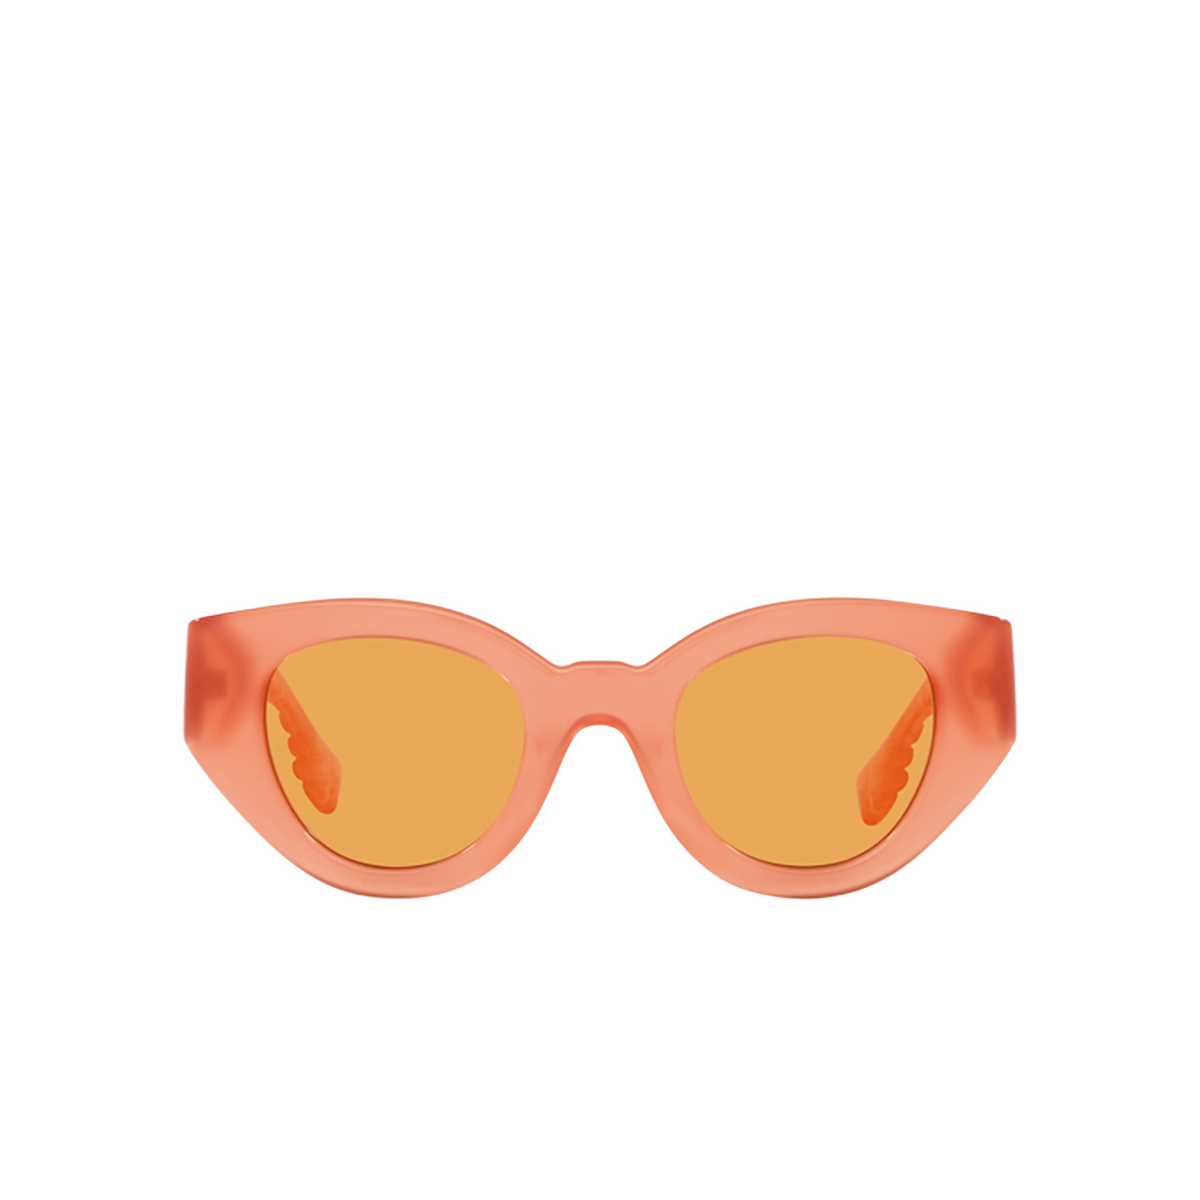 Burberry Meadow Sunglasses 4068/7 Orange - front view